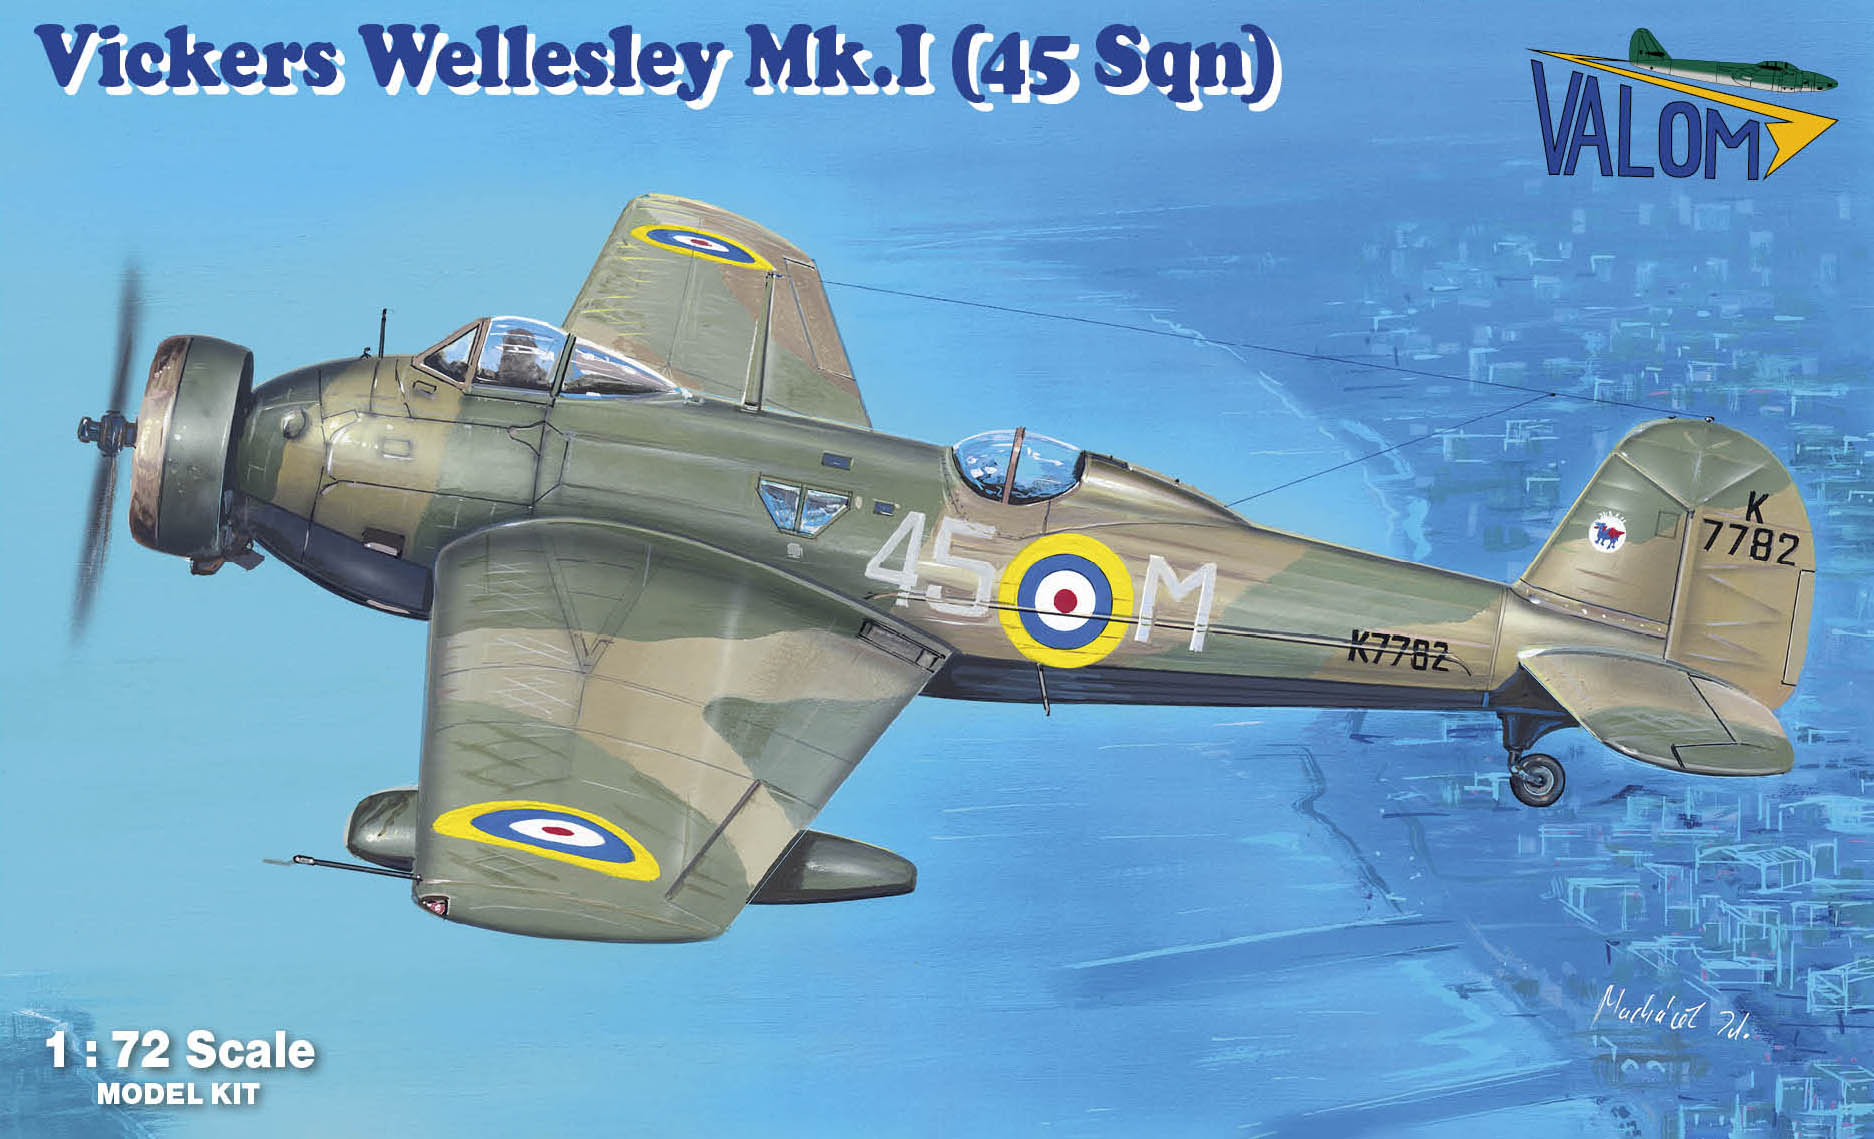 1/72 Vickers Wellesley Mk.I (45 Sqn) - Valom